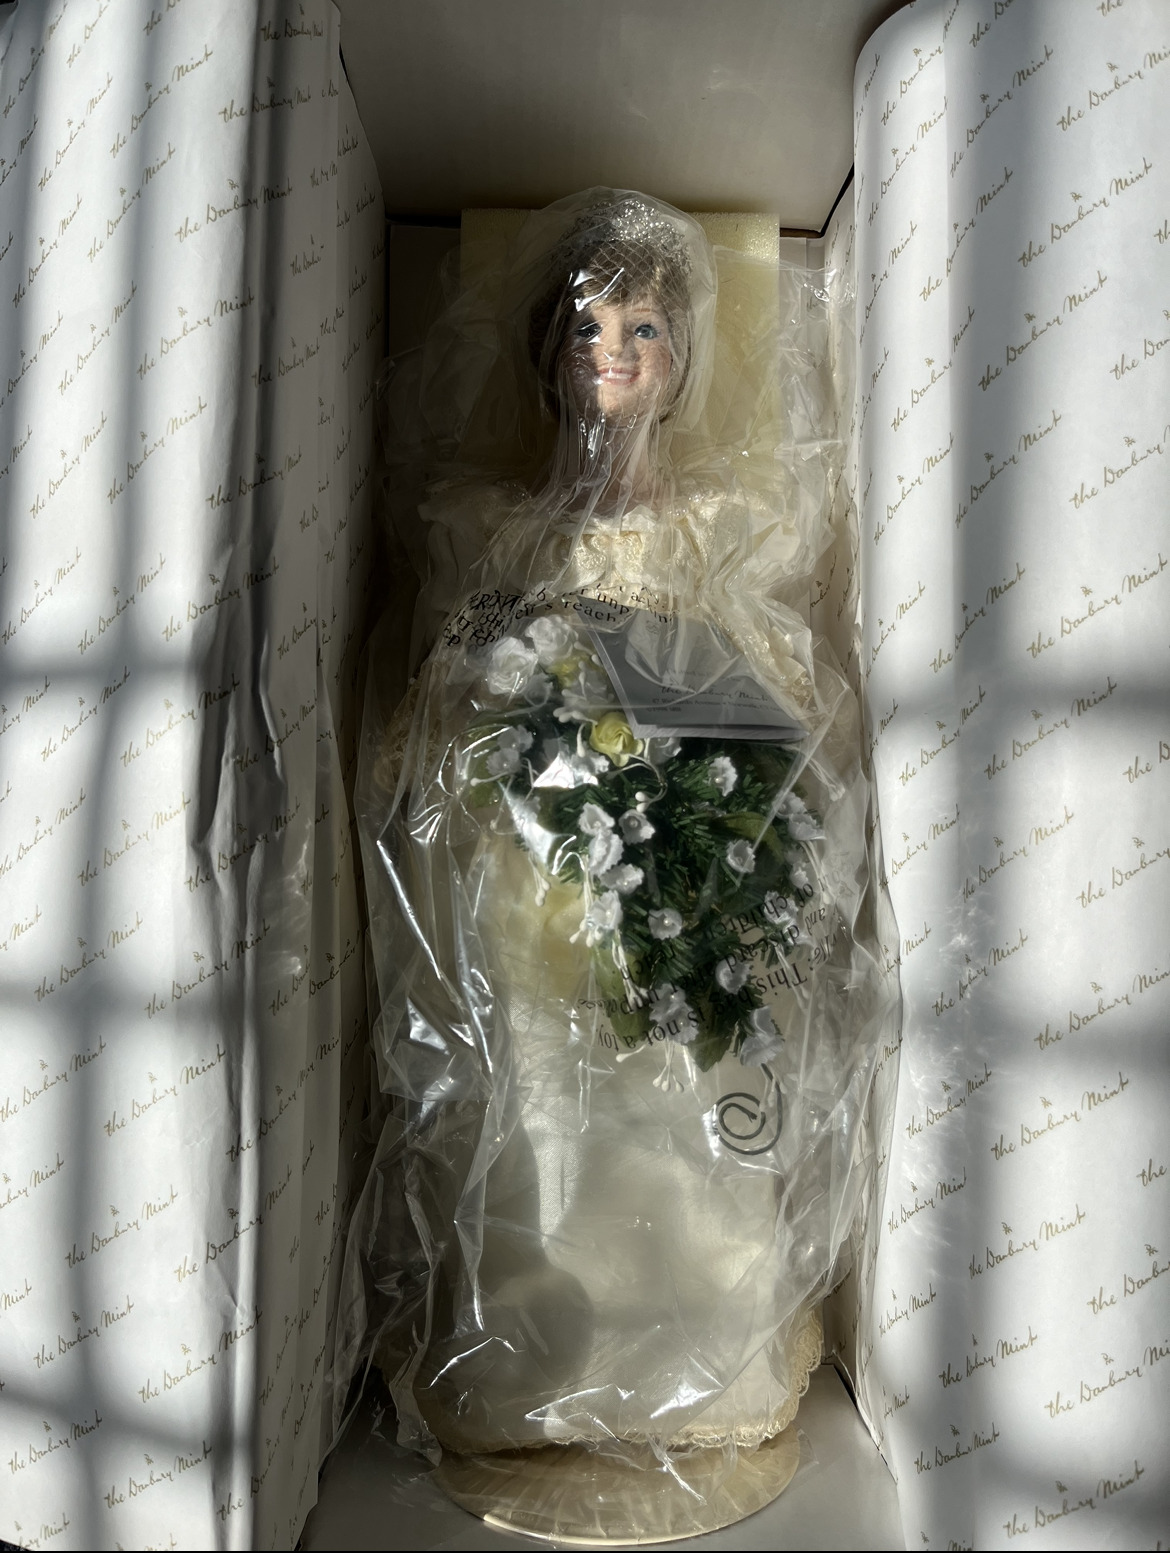 THE PRINCESS DIANA BRIDE DOLL - ROYAL WEDDING DANBURY MINT G4776